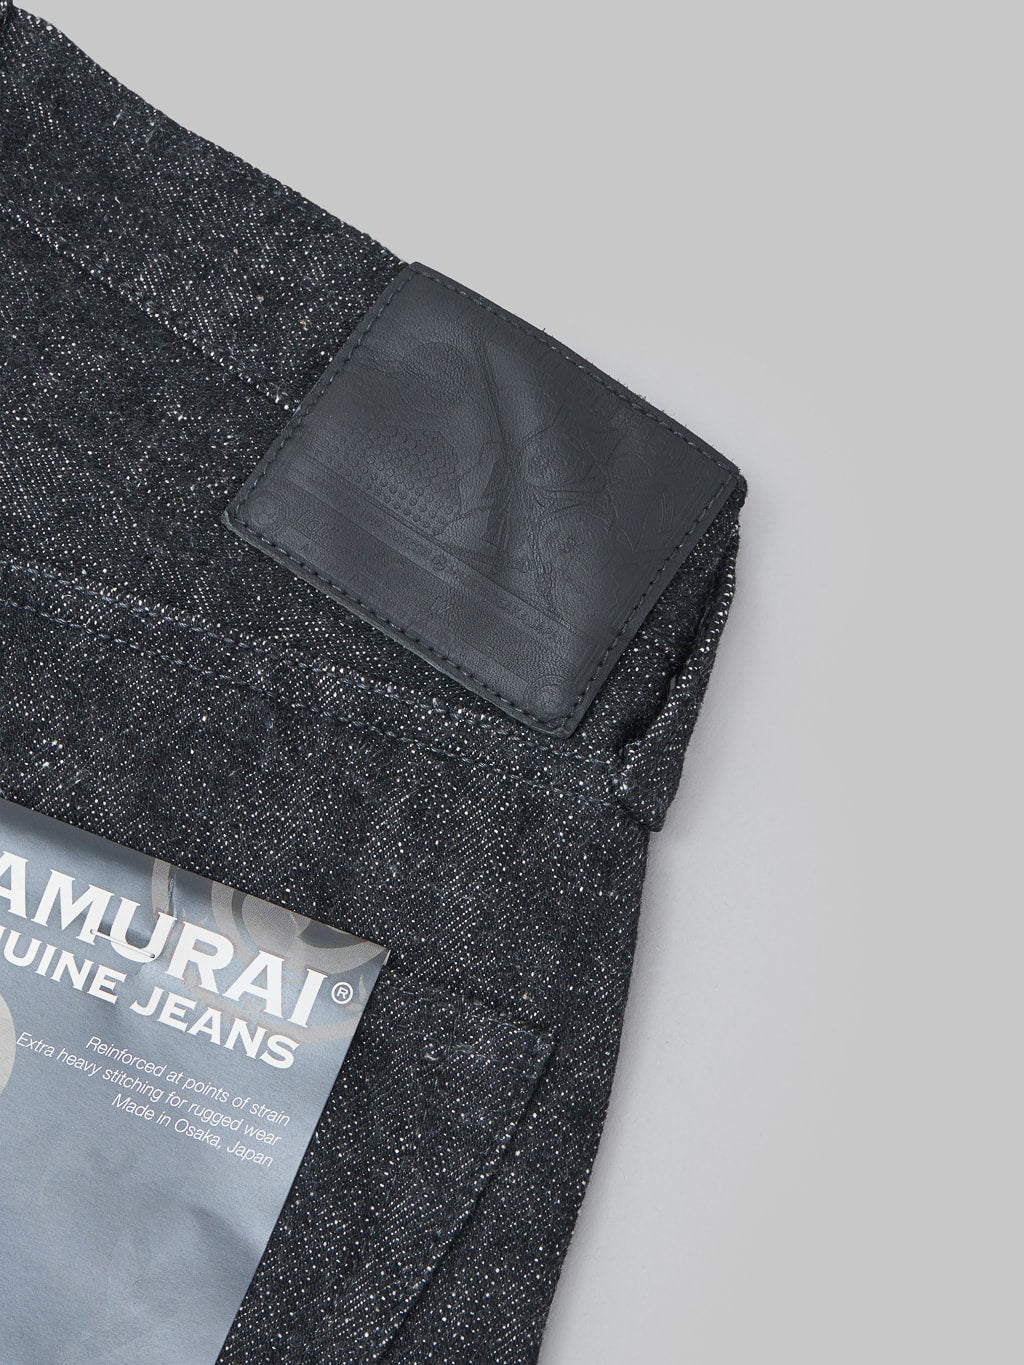 Samurai Jeans S211BK Koku Benkei 17oz Slubby Black Relaxed Tapered Jeans patch